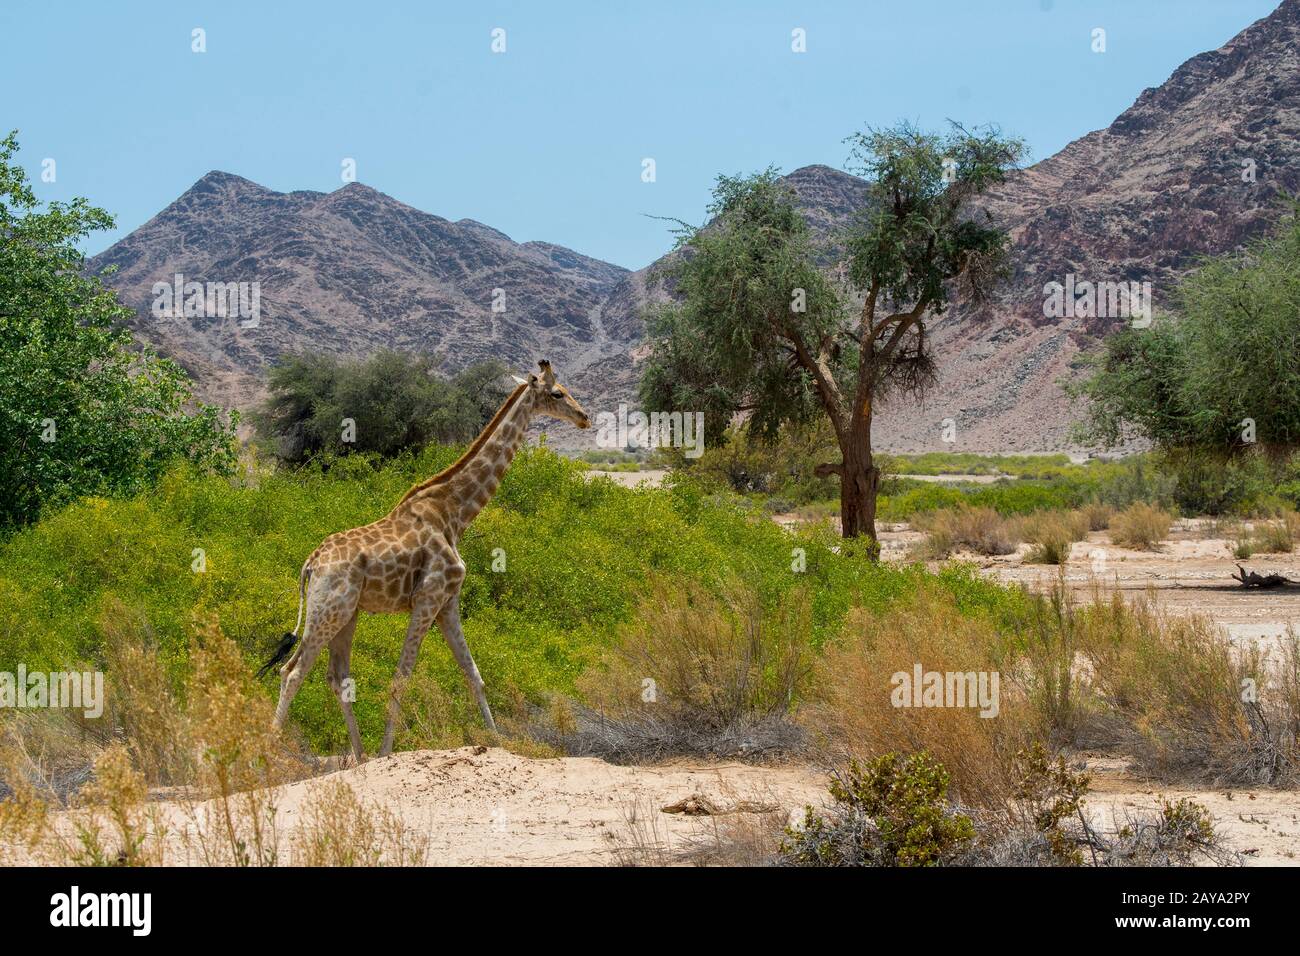 An Angolan giraffe (Giraffa giraffa angolensis), a southern giraffe sub-species, is walking through the desert landscape of the Huanib River Valley in Stock Photo